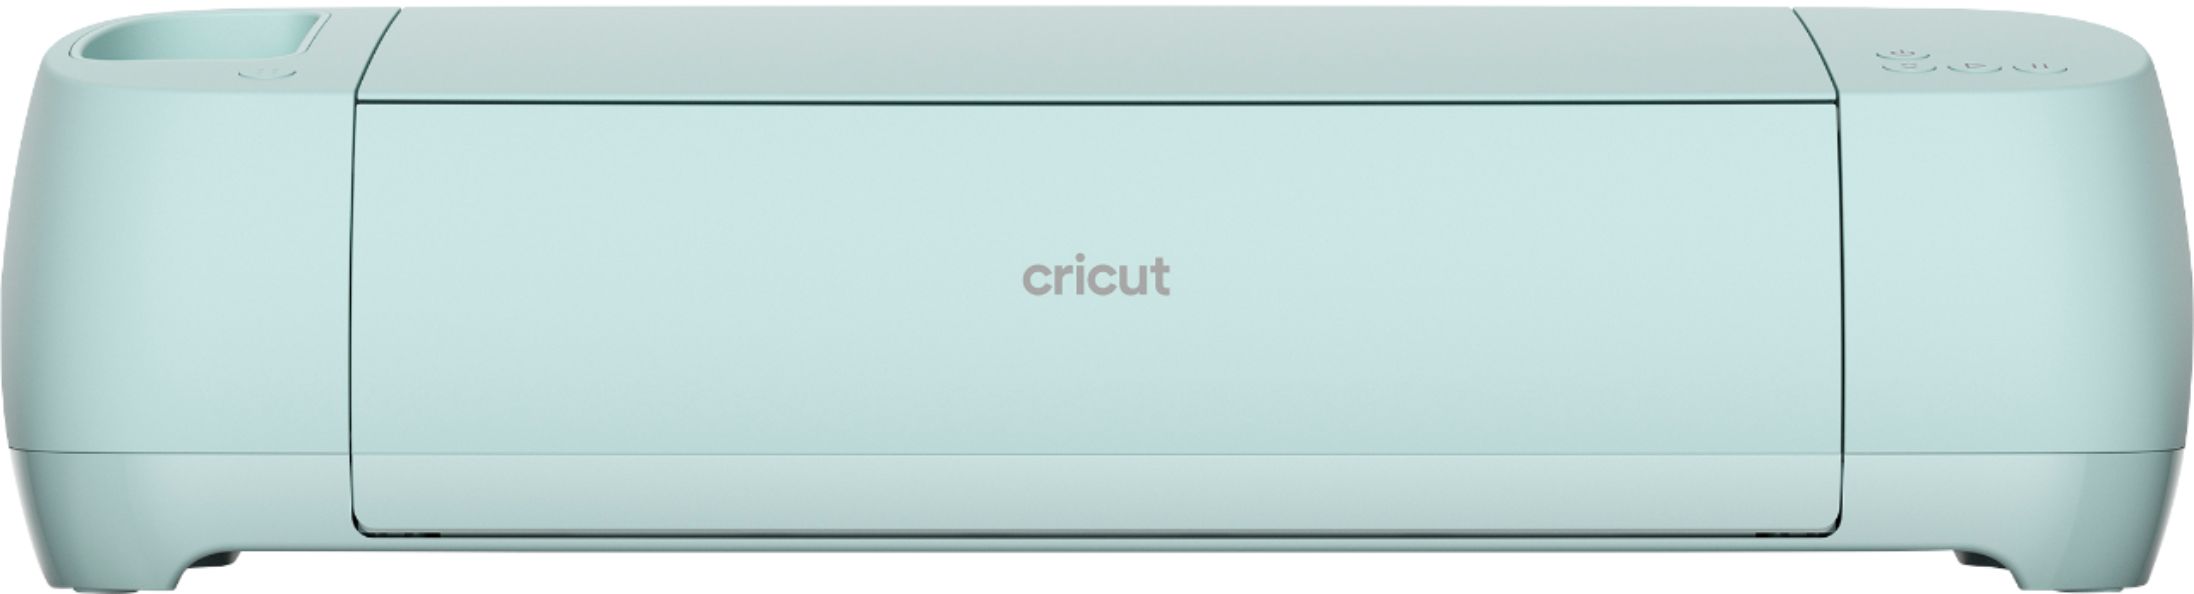 Cricut Explore 3 Vinyl Die Cutting Machine - New & Sealed